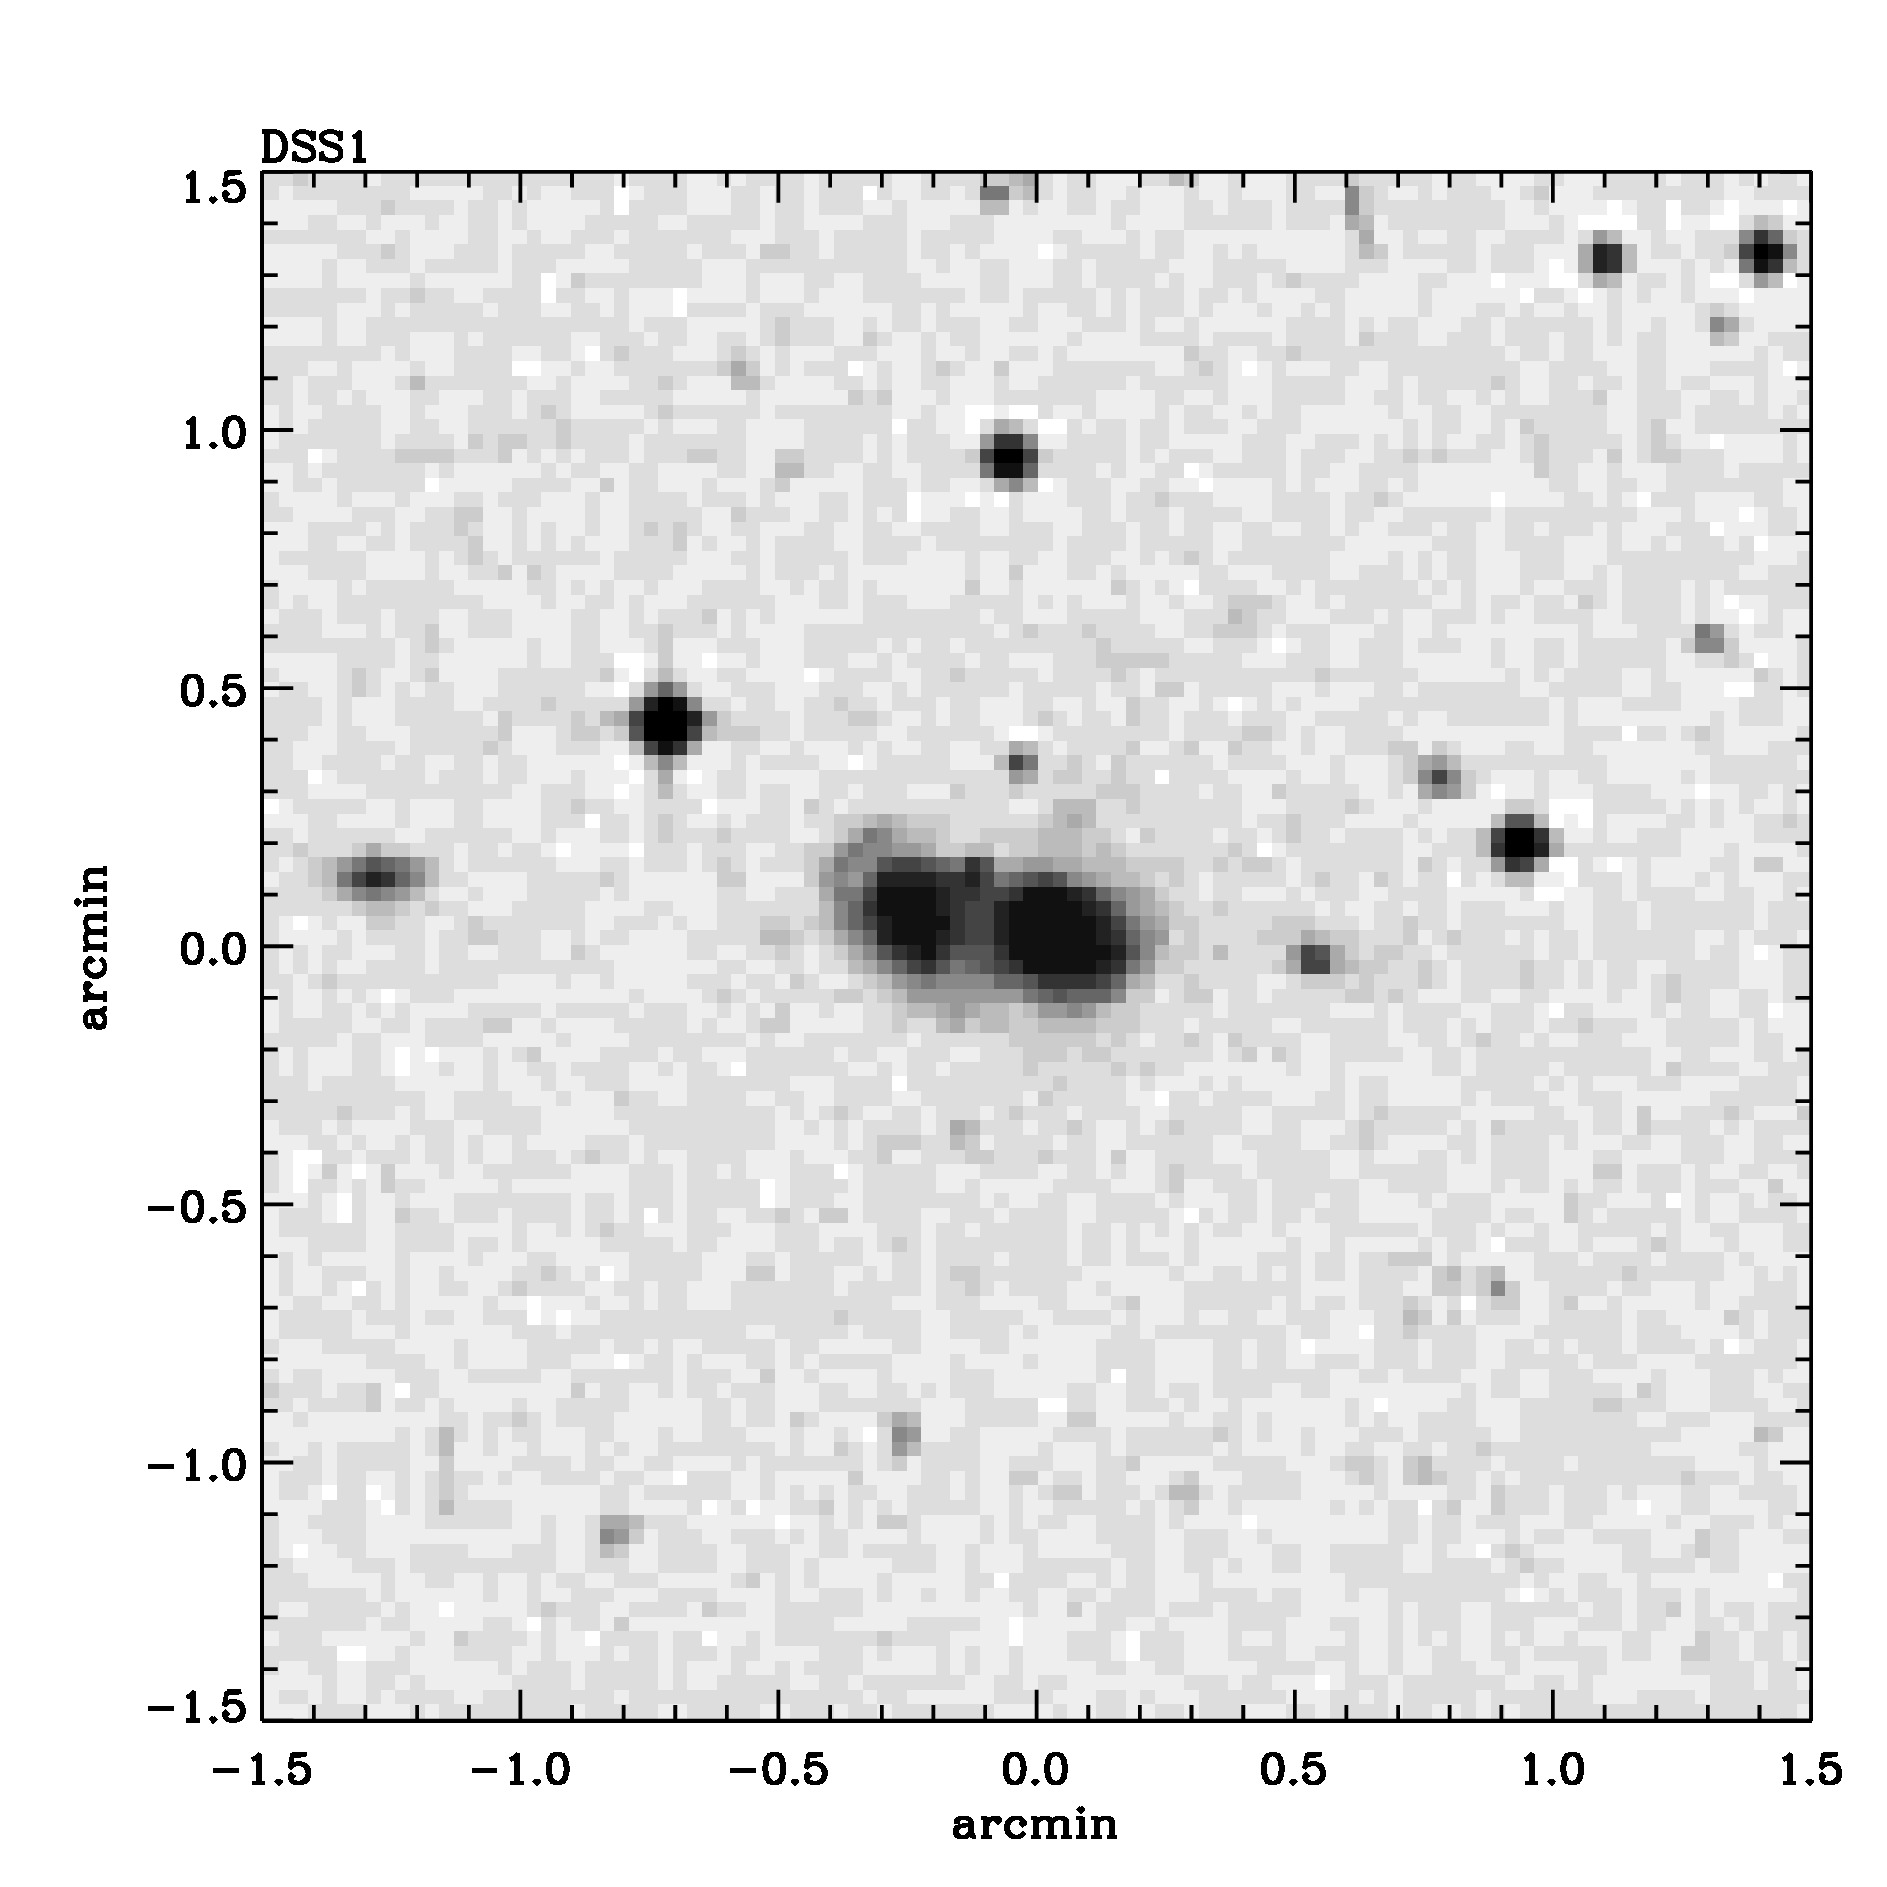 Optical image for SWIFT J1334.8-2328